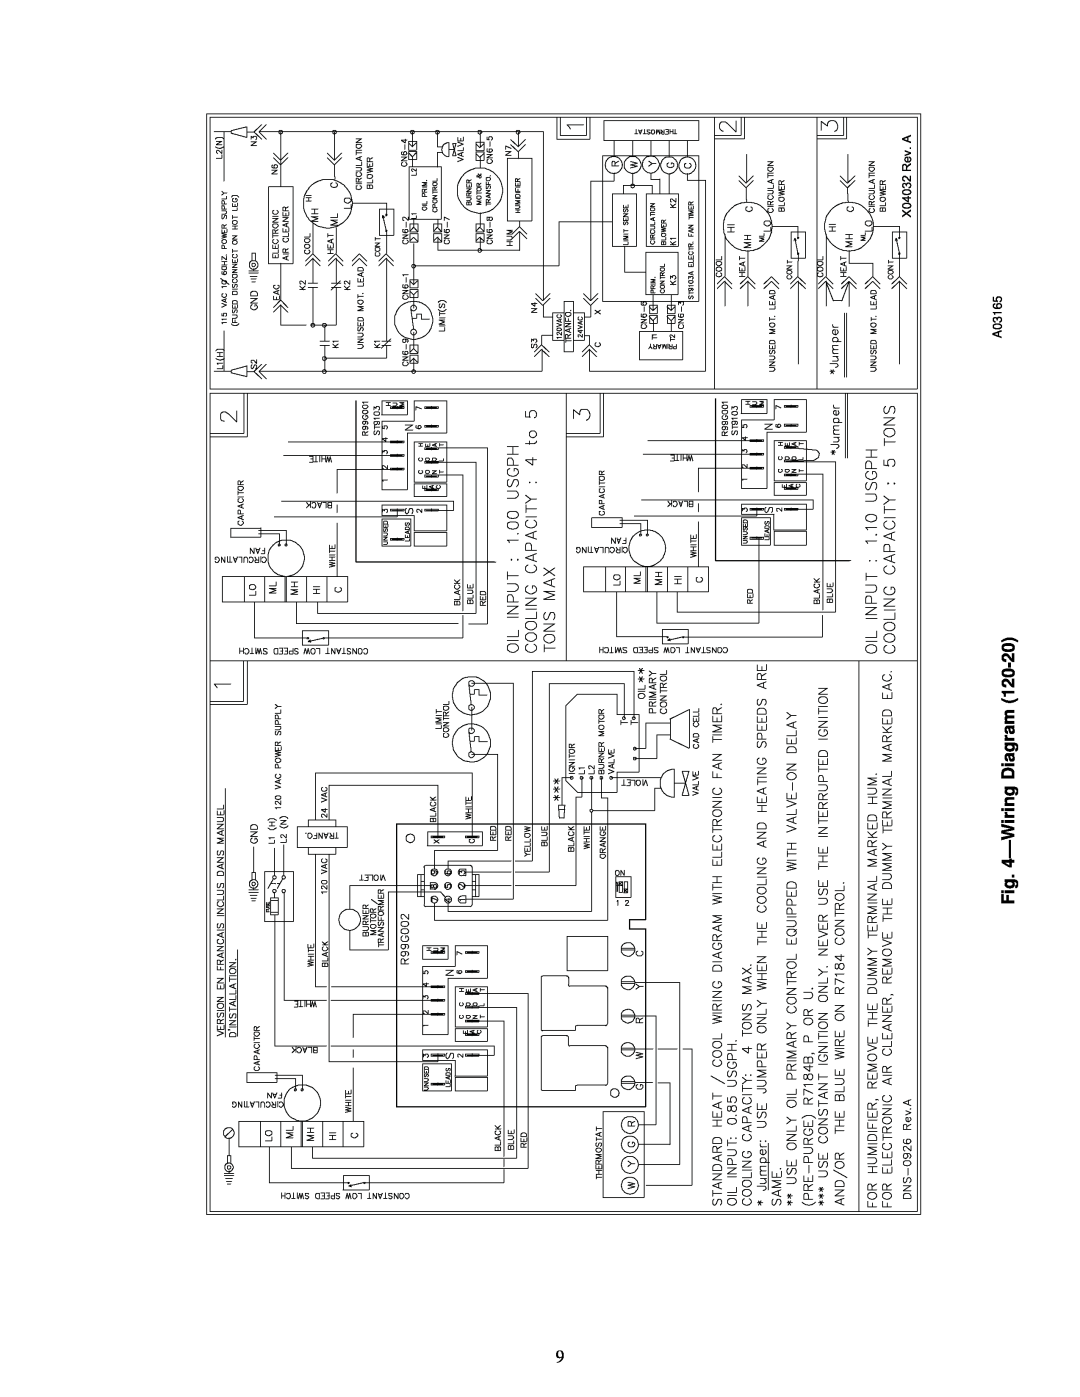 Carrier 58CMA instruction manual WiringDiagram, X04032 Rev. A, A03165 